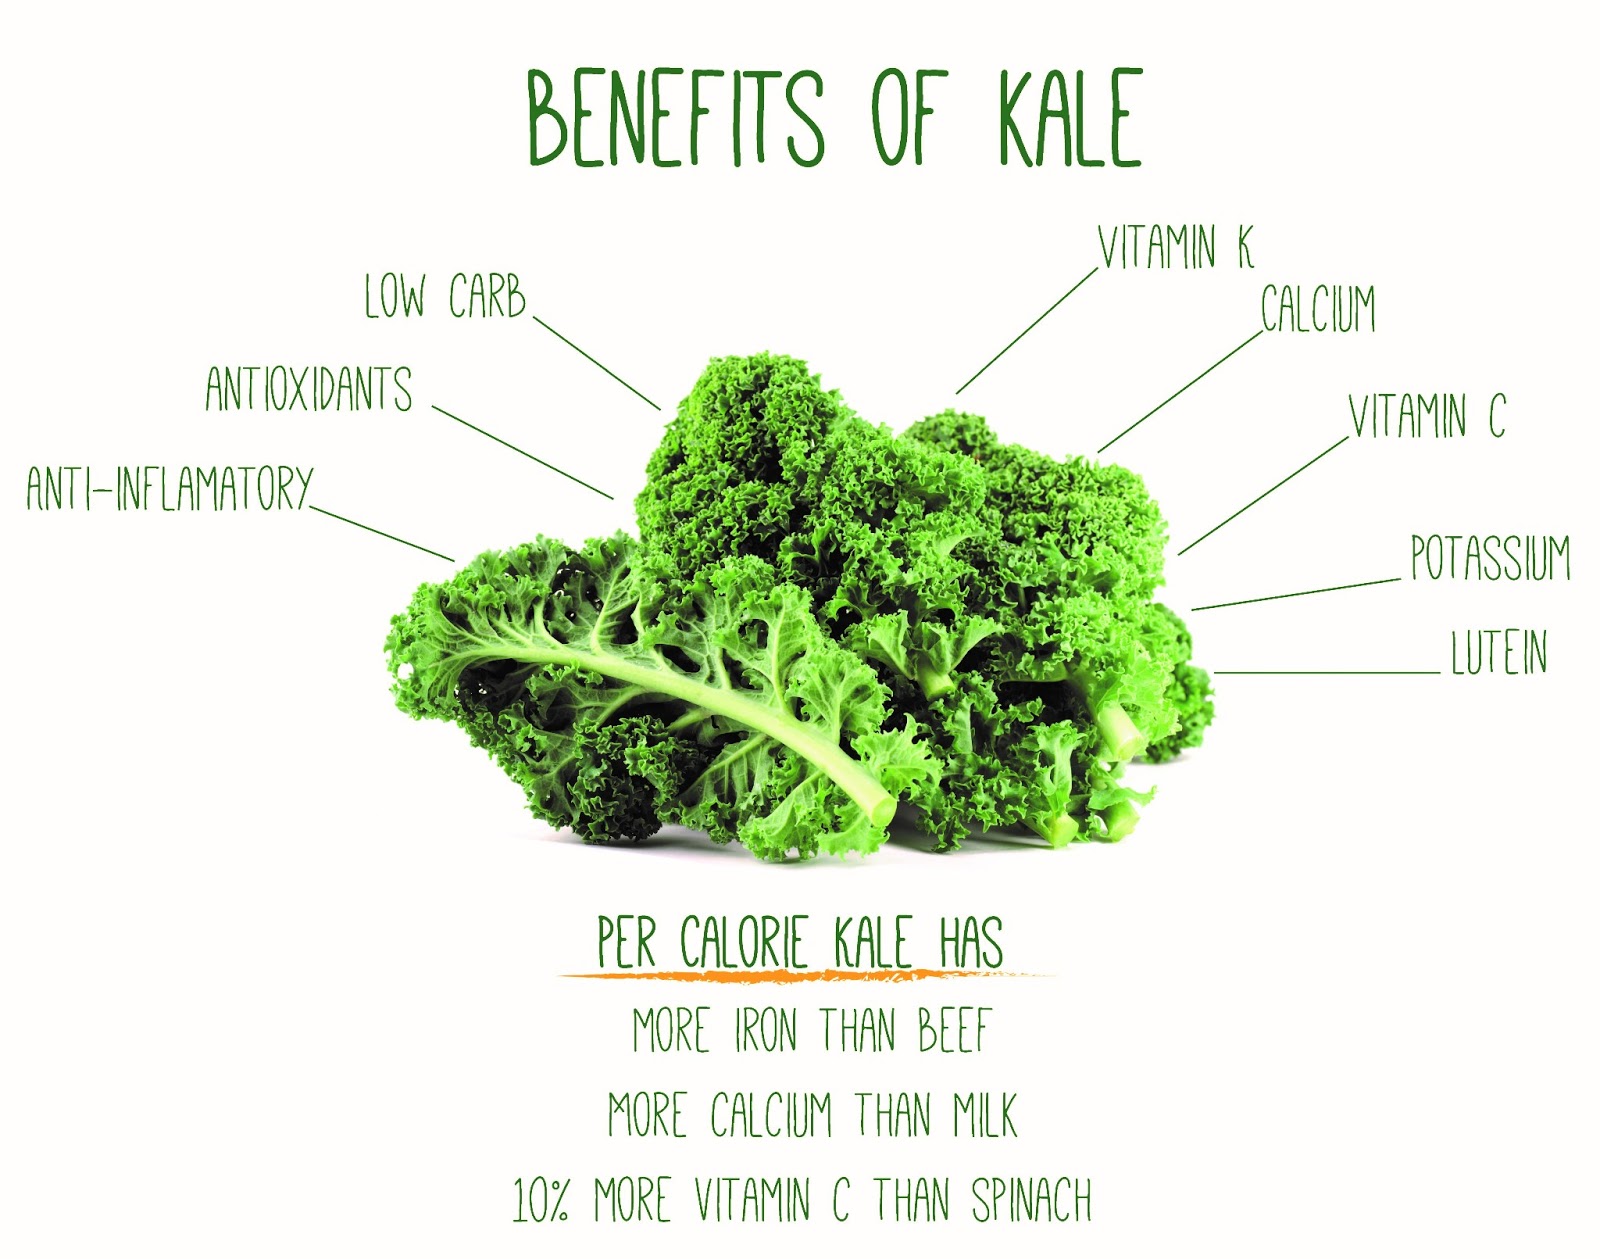 Benefits of kale